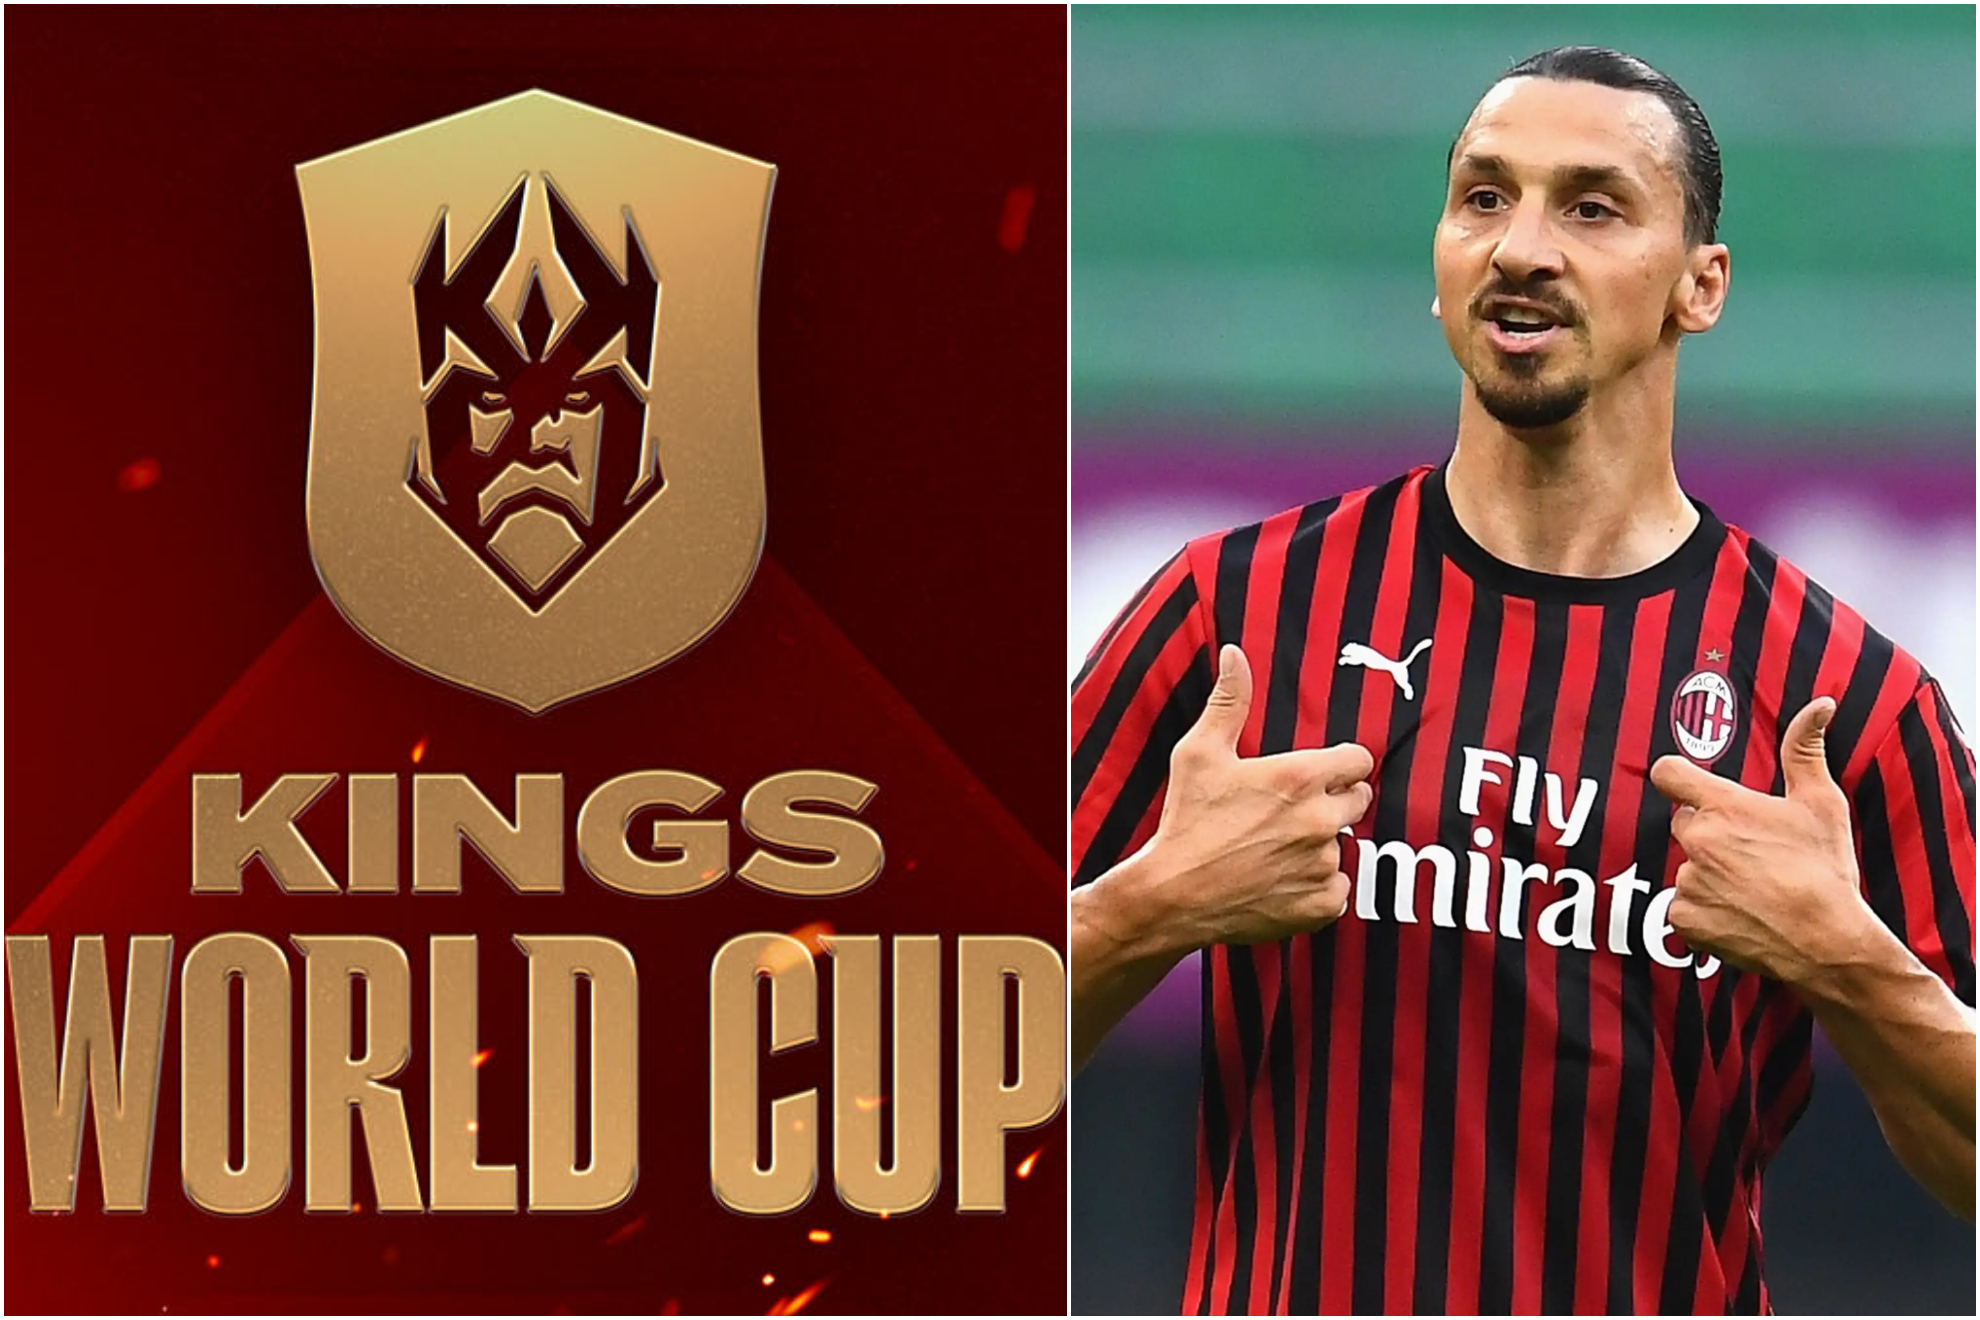 Zlatan Ibrahimovic se une al proyecto de la Kings World Cup